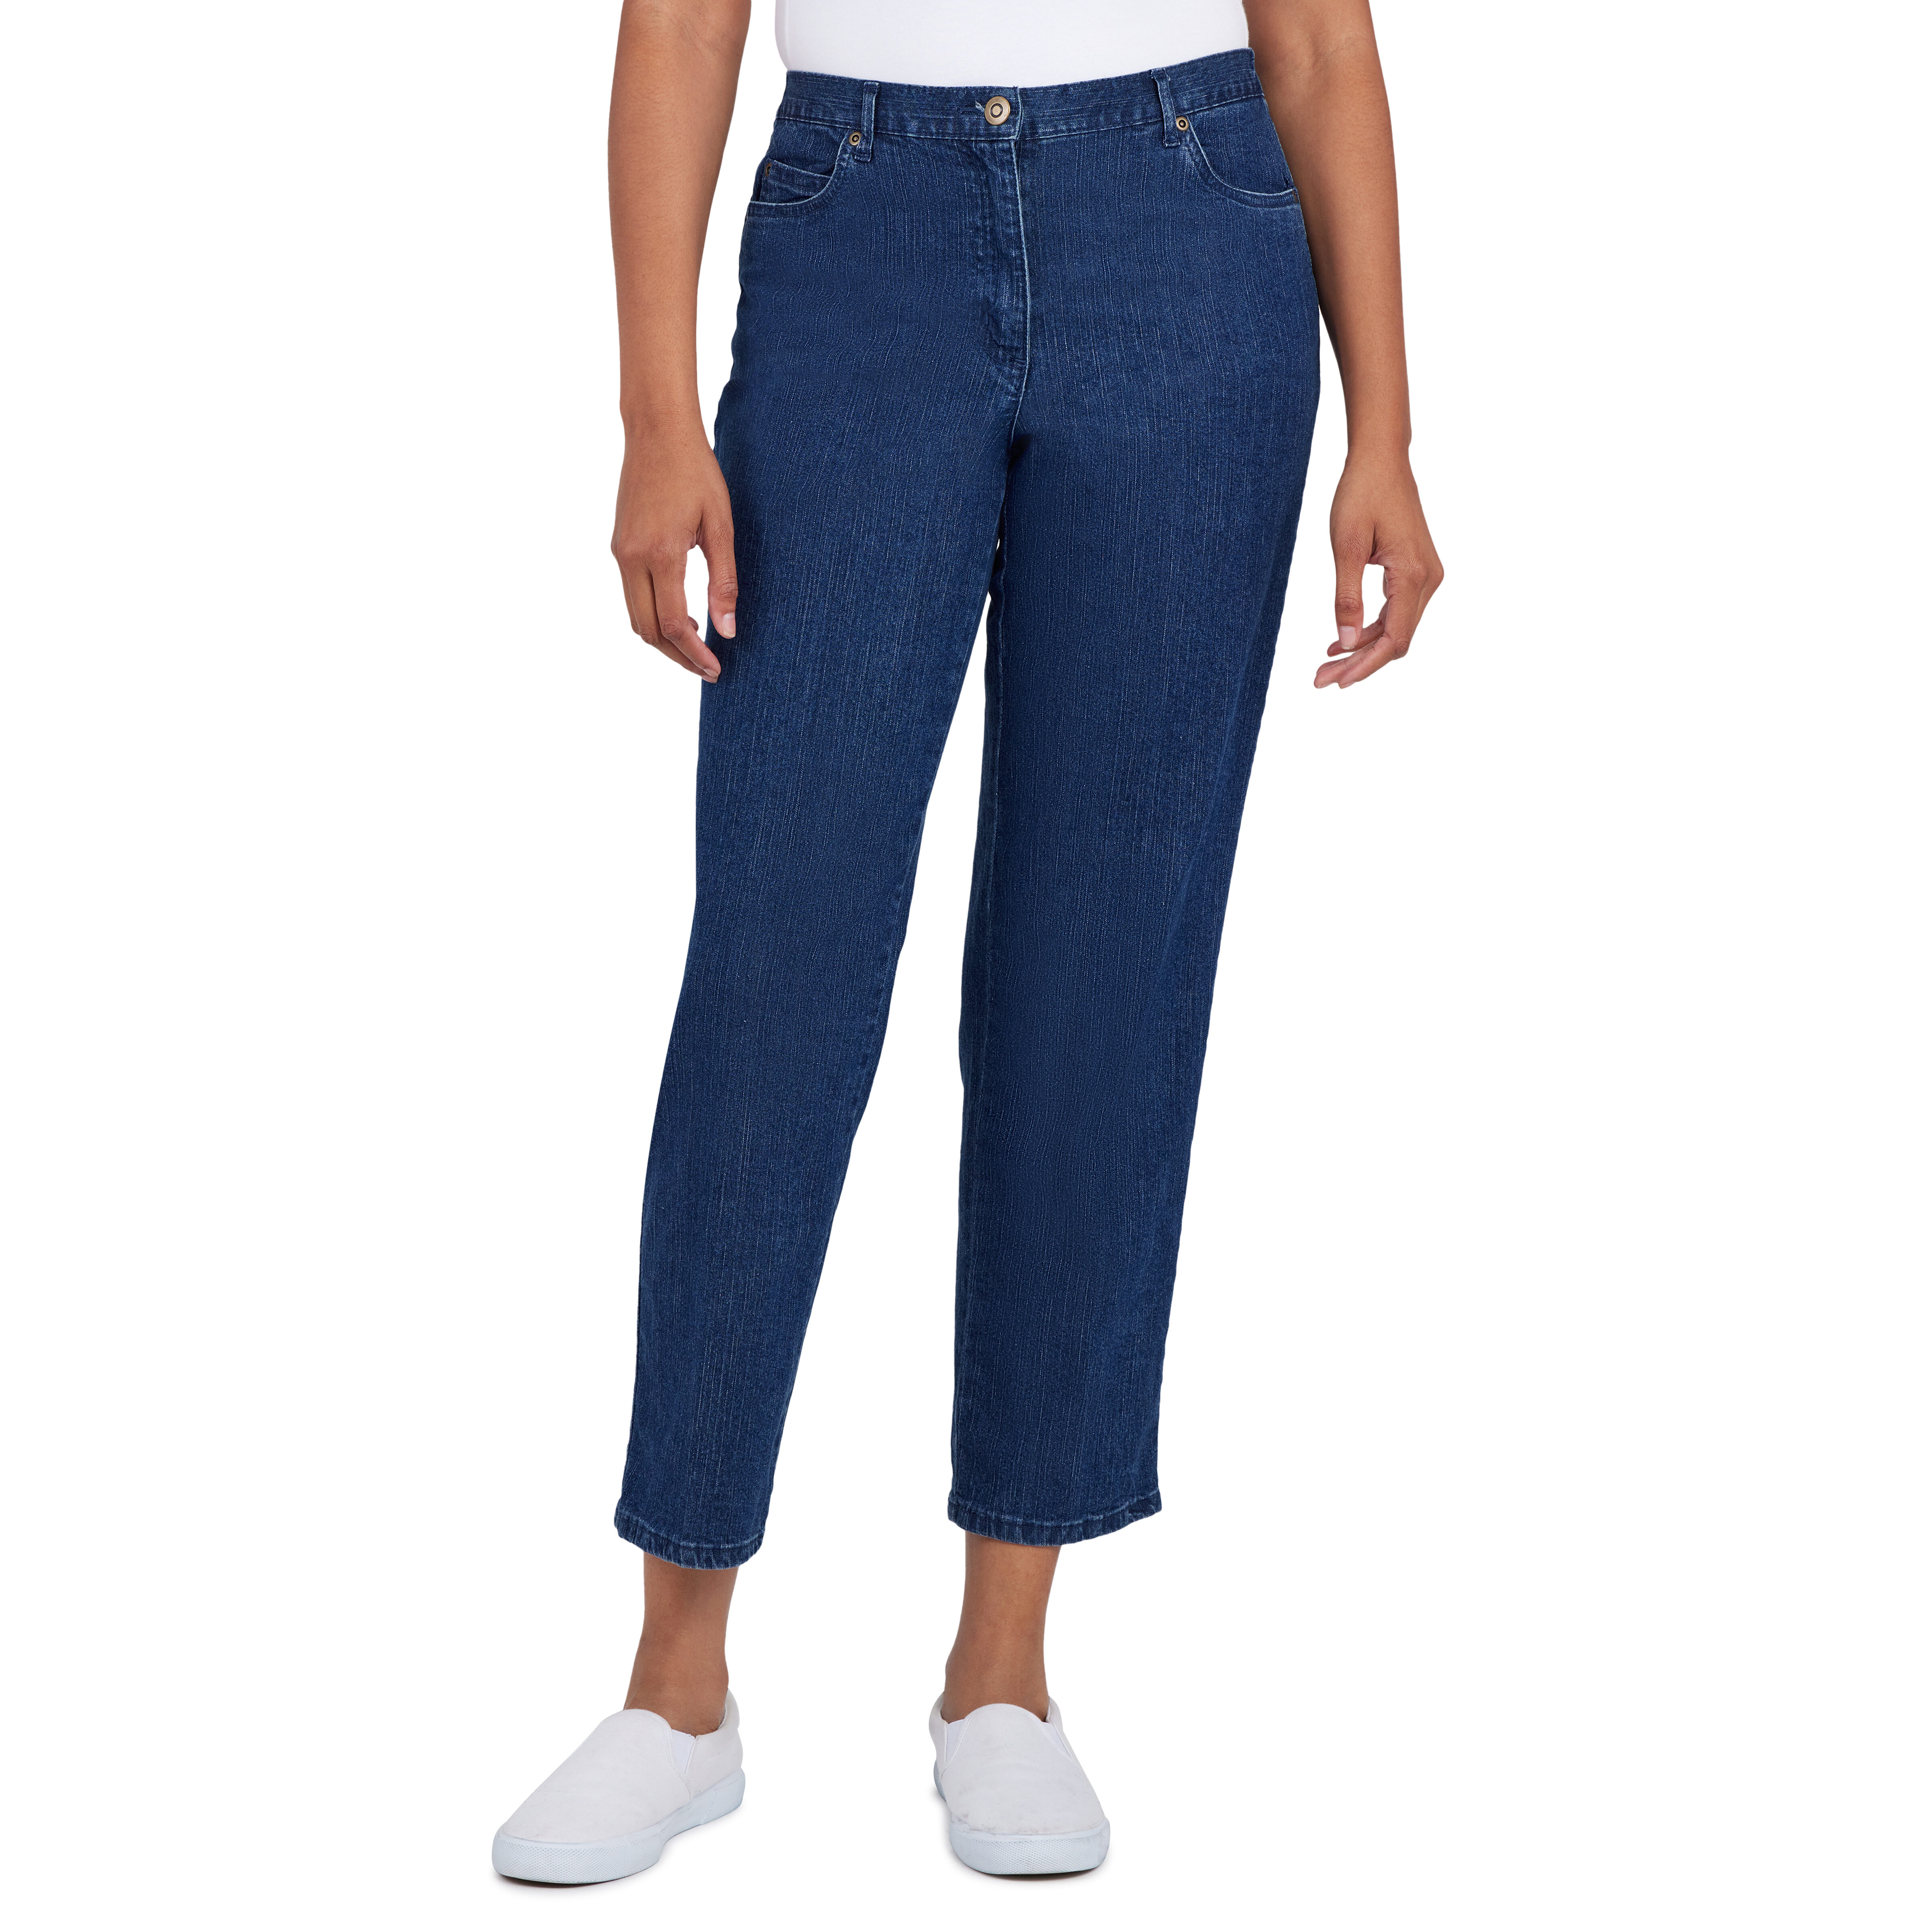 Women's Super Soft Denim-Like Twill Jeans